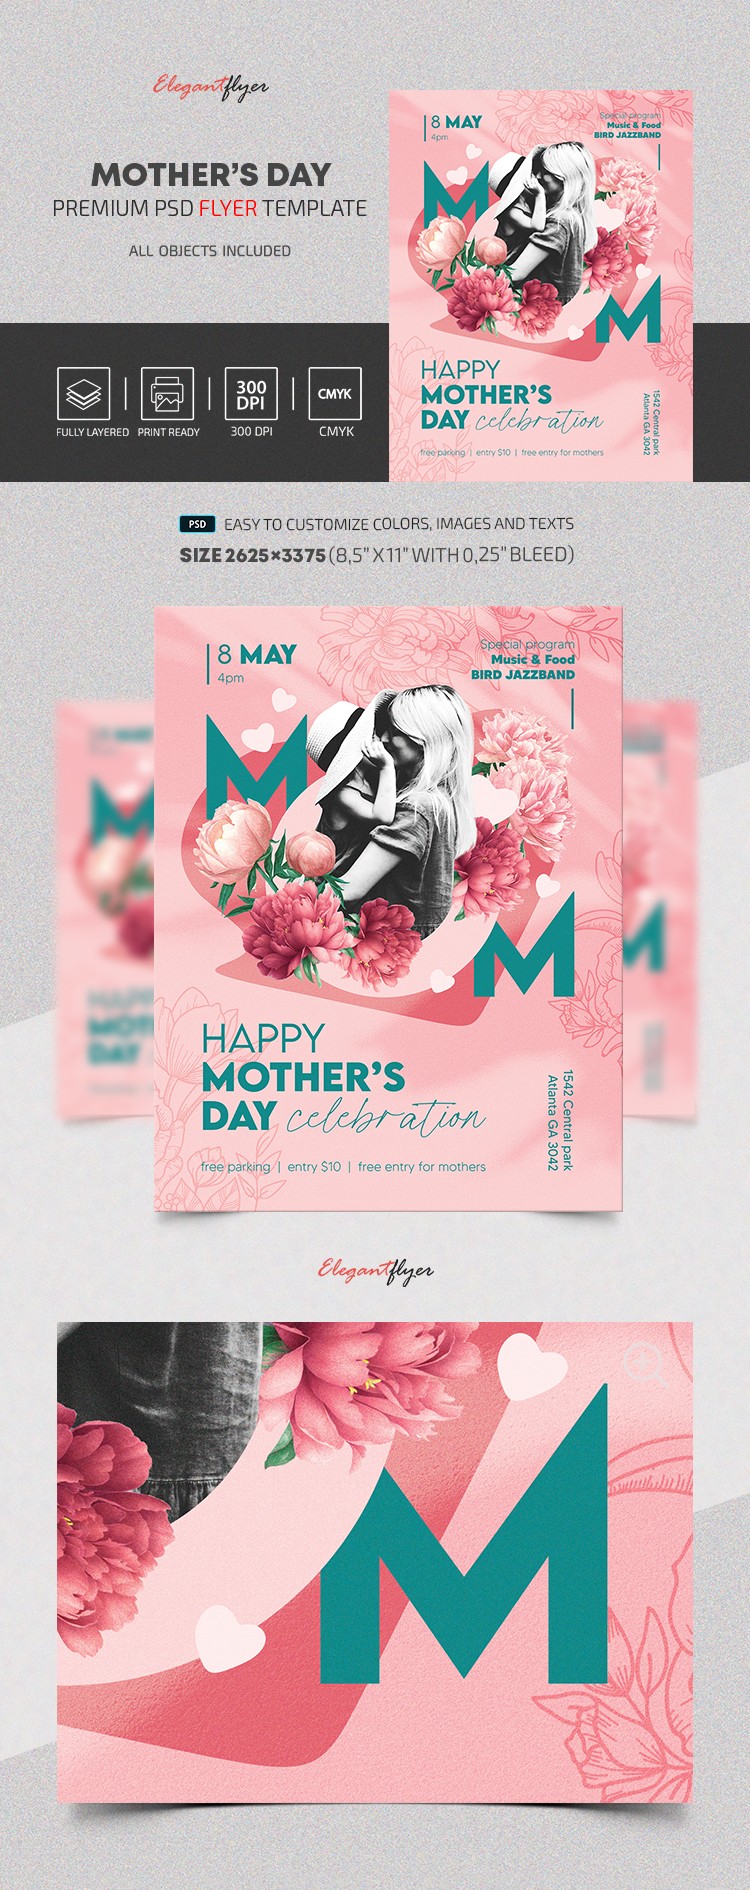 Mother's Day Flyer by ElegantFlyer